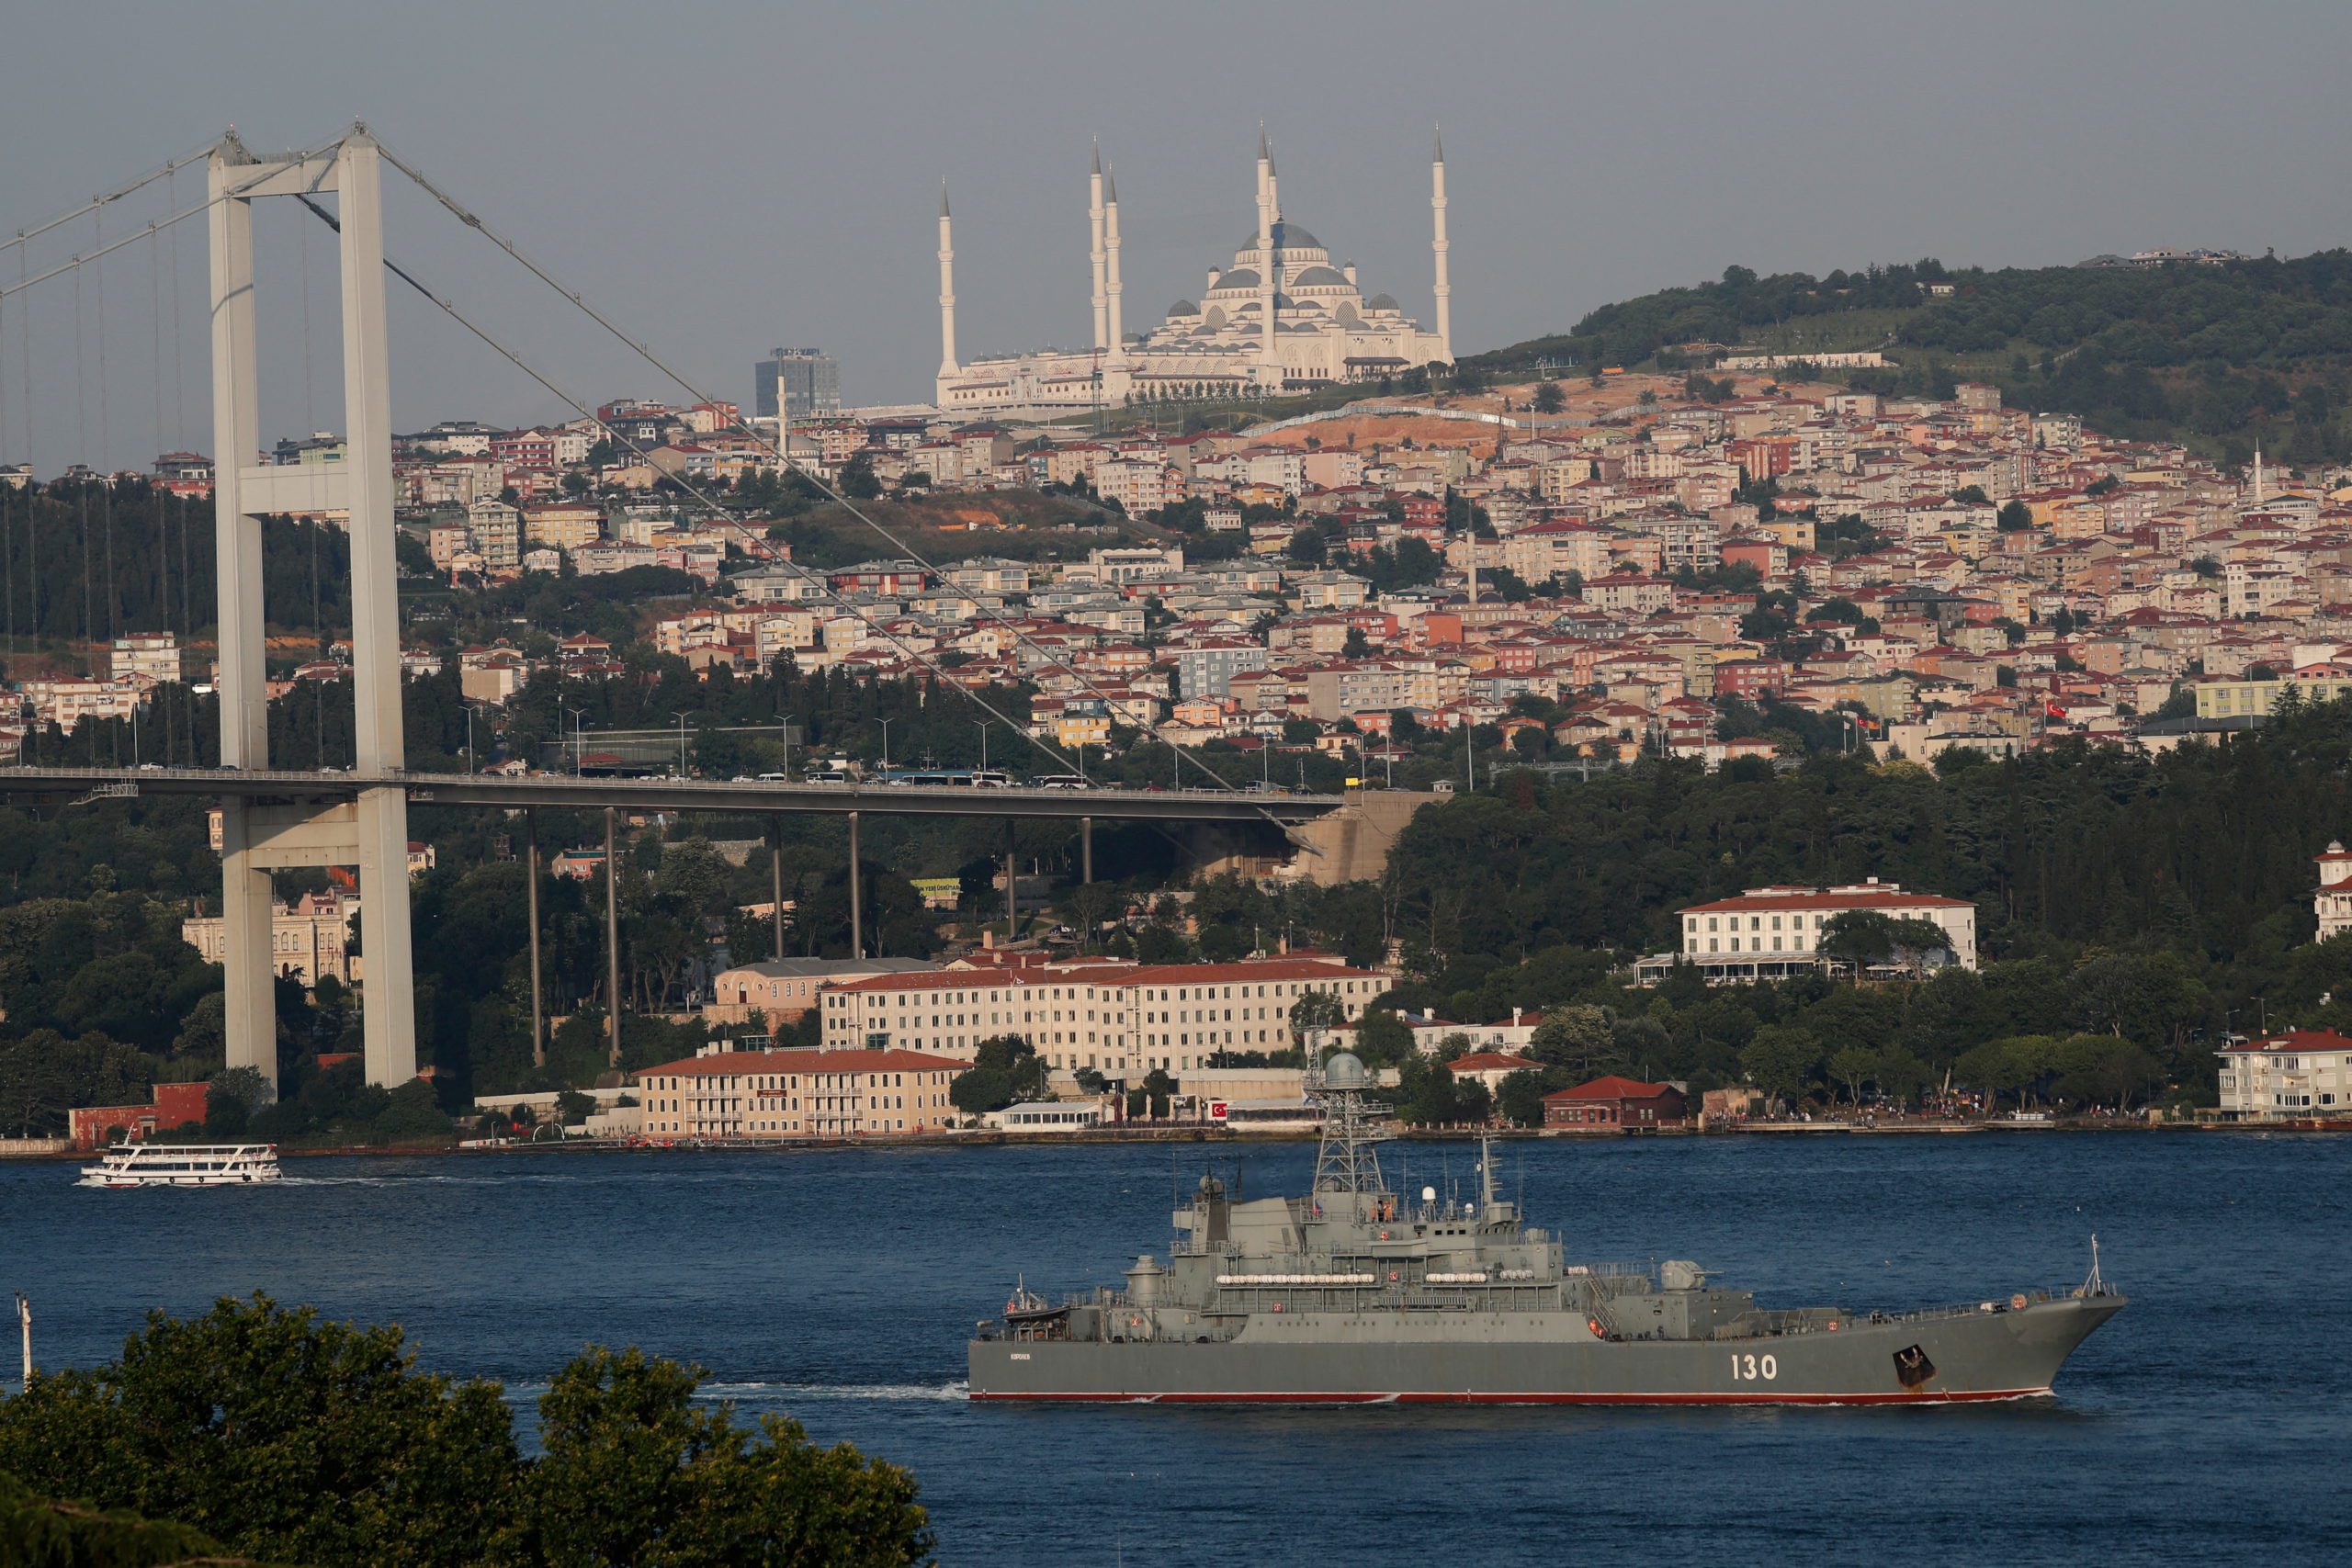 Russian Navy Warship in Turkey